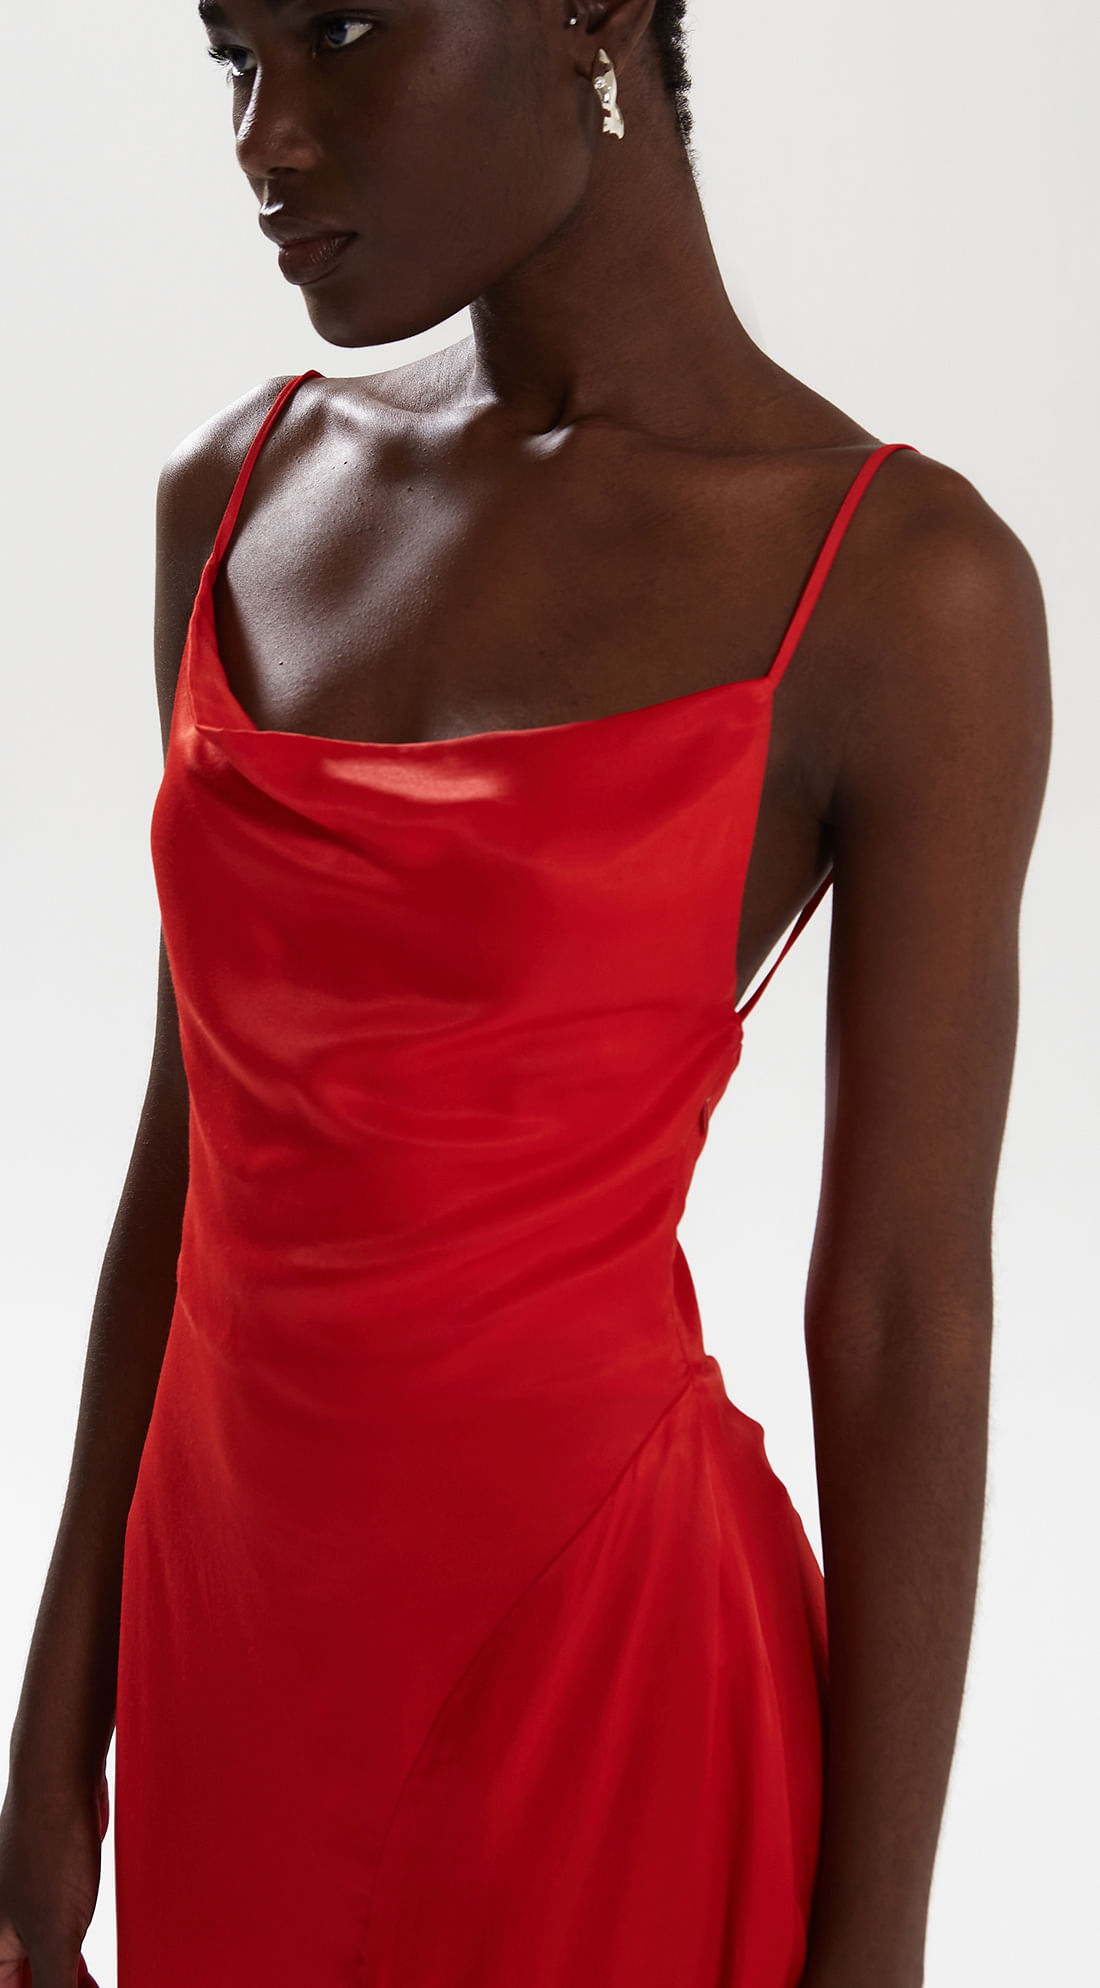 Vestido-camisa curto - Vermelho Mesclado - Kiabi - 29.00€